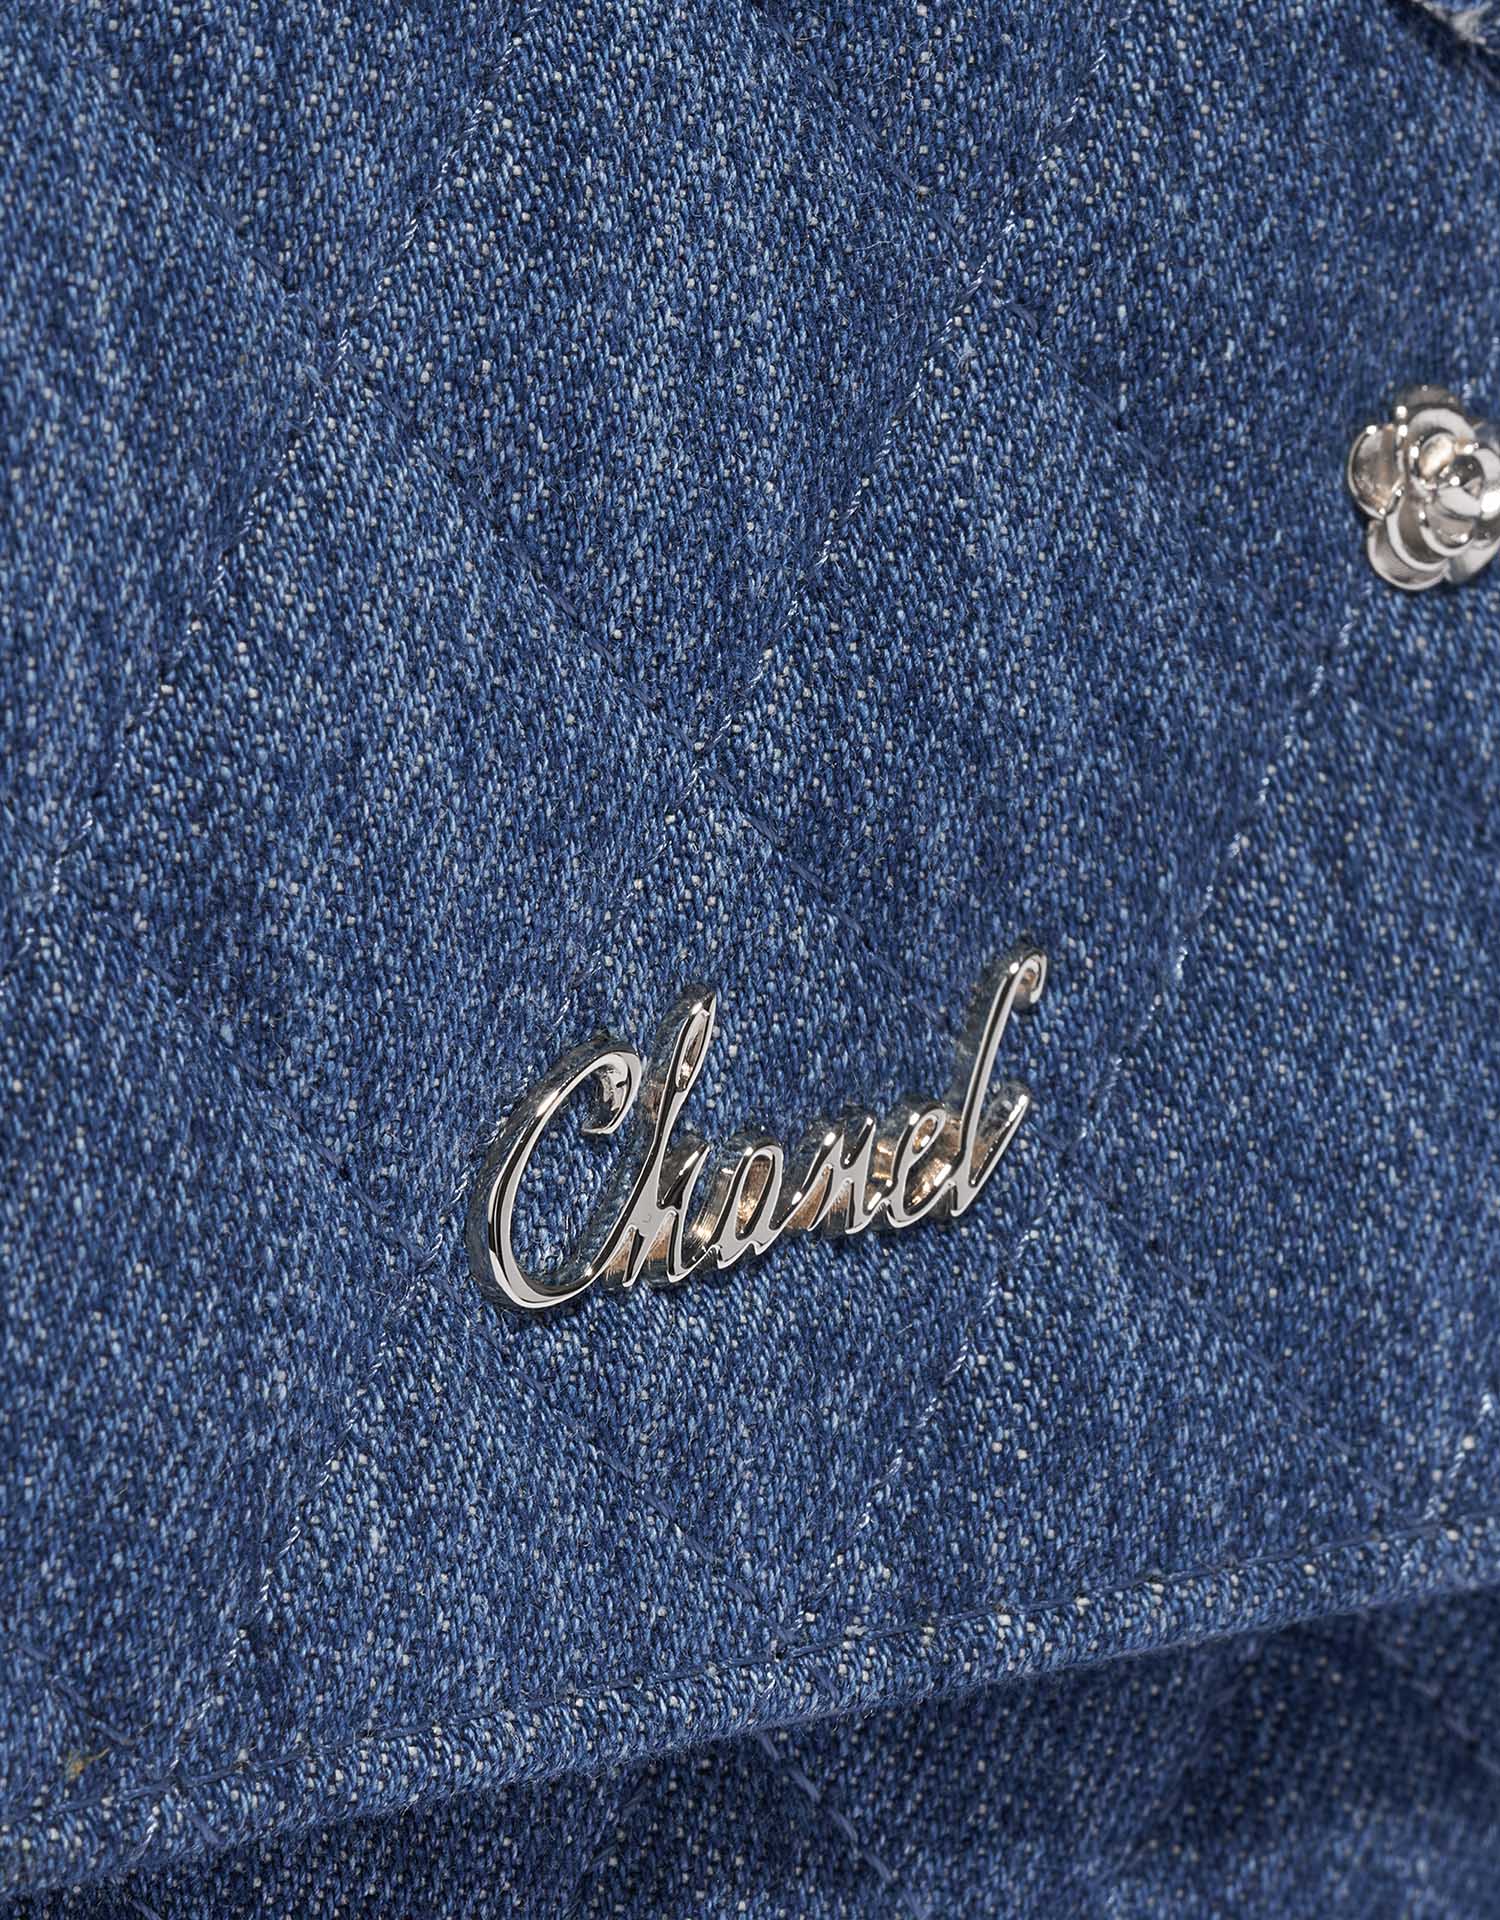 Chanel - Authenticated 2.55 Wallet - Denim - Jeans Blue Plain for Women, Good Condition